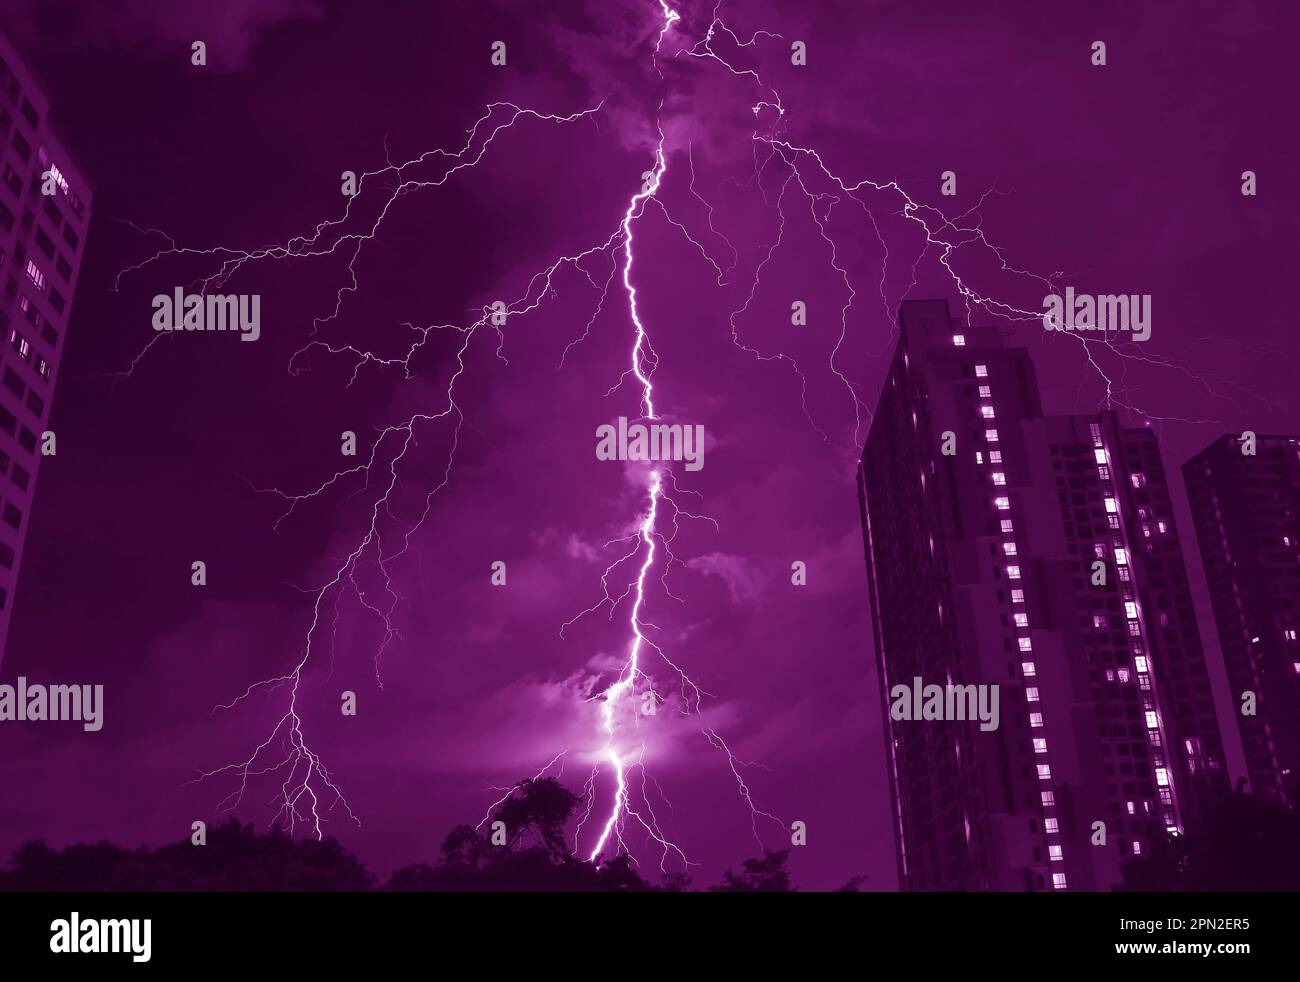 Pop Art Surreal Style of Amazing Lightning Strikes in Dark Purple Colored Urban Night Sky Stock Photo